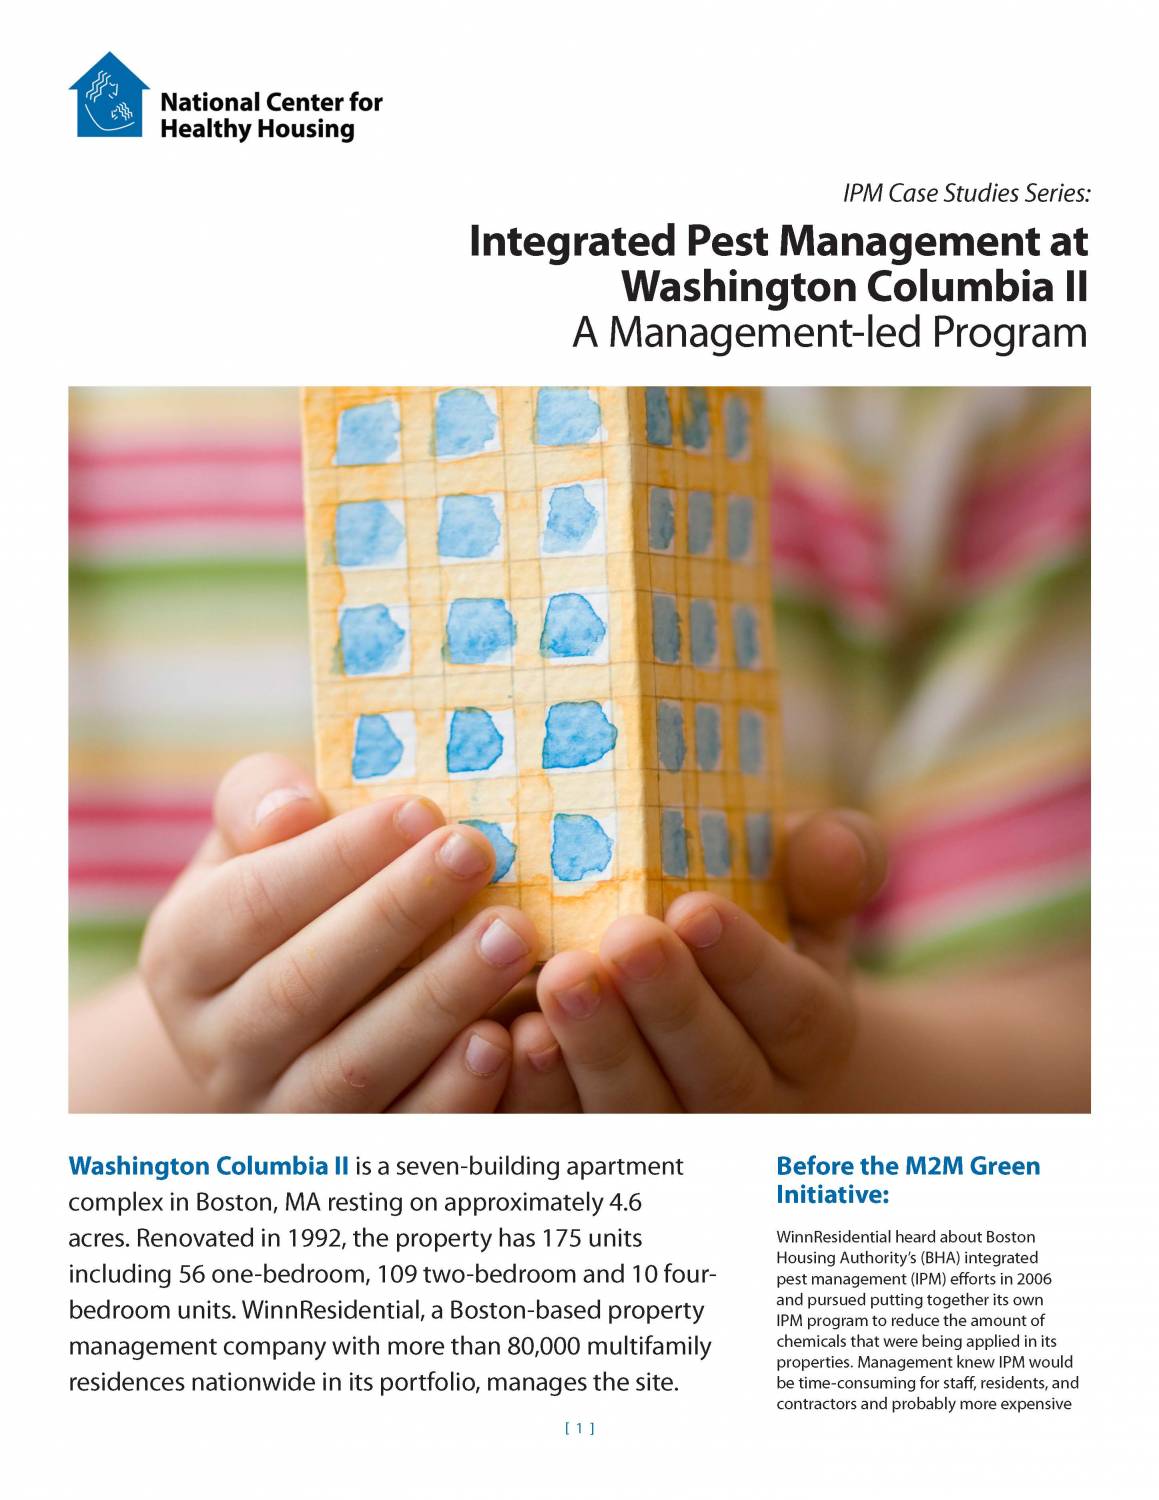 Case Study: Integrated-Pest Management at Washington Columbia II